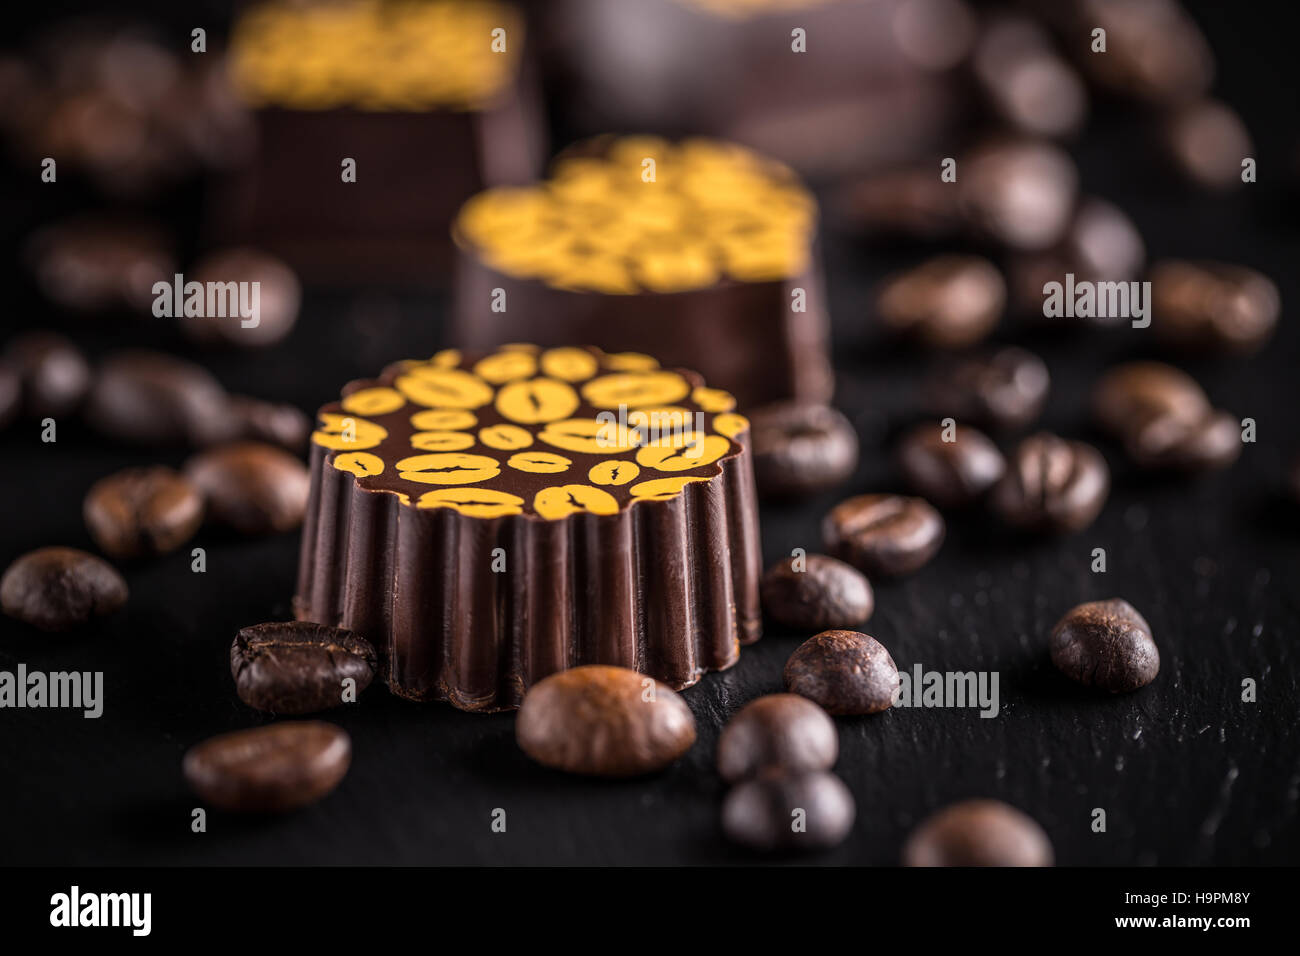 Chocolate praline Stock Photo